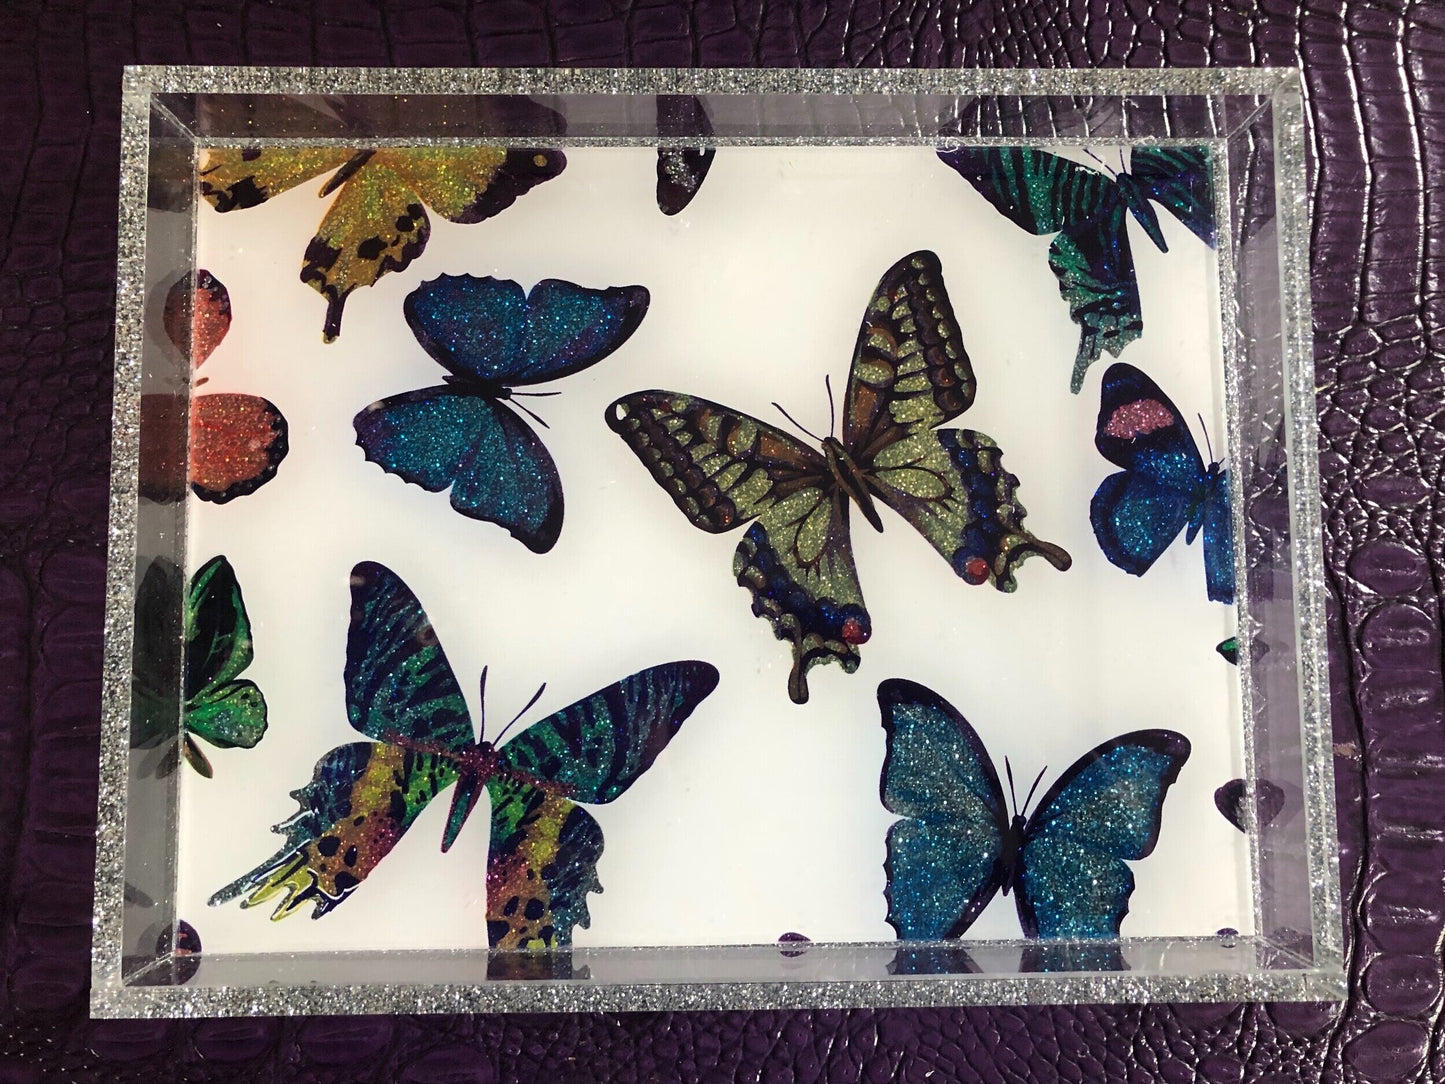 Butterfly Tray